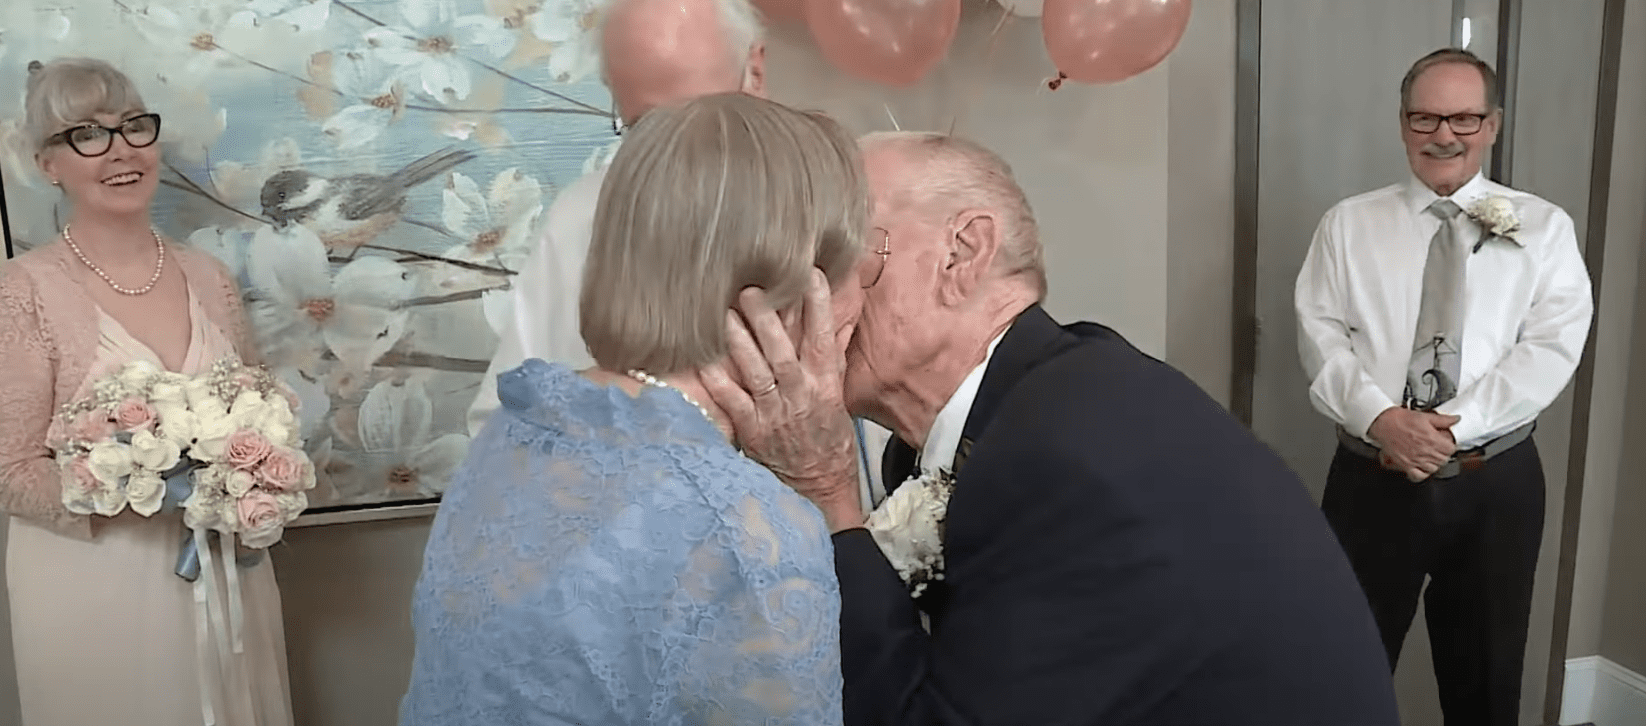 Carl Hammer and Reva Truitt sharing a kiss on their wedding day | Source: youtube.com/CBS Sacramento